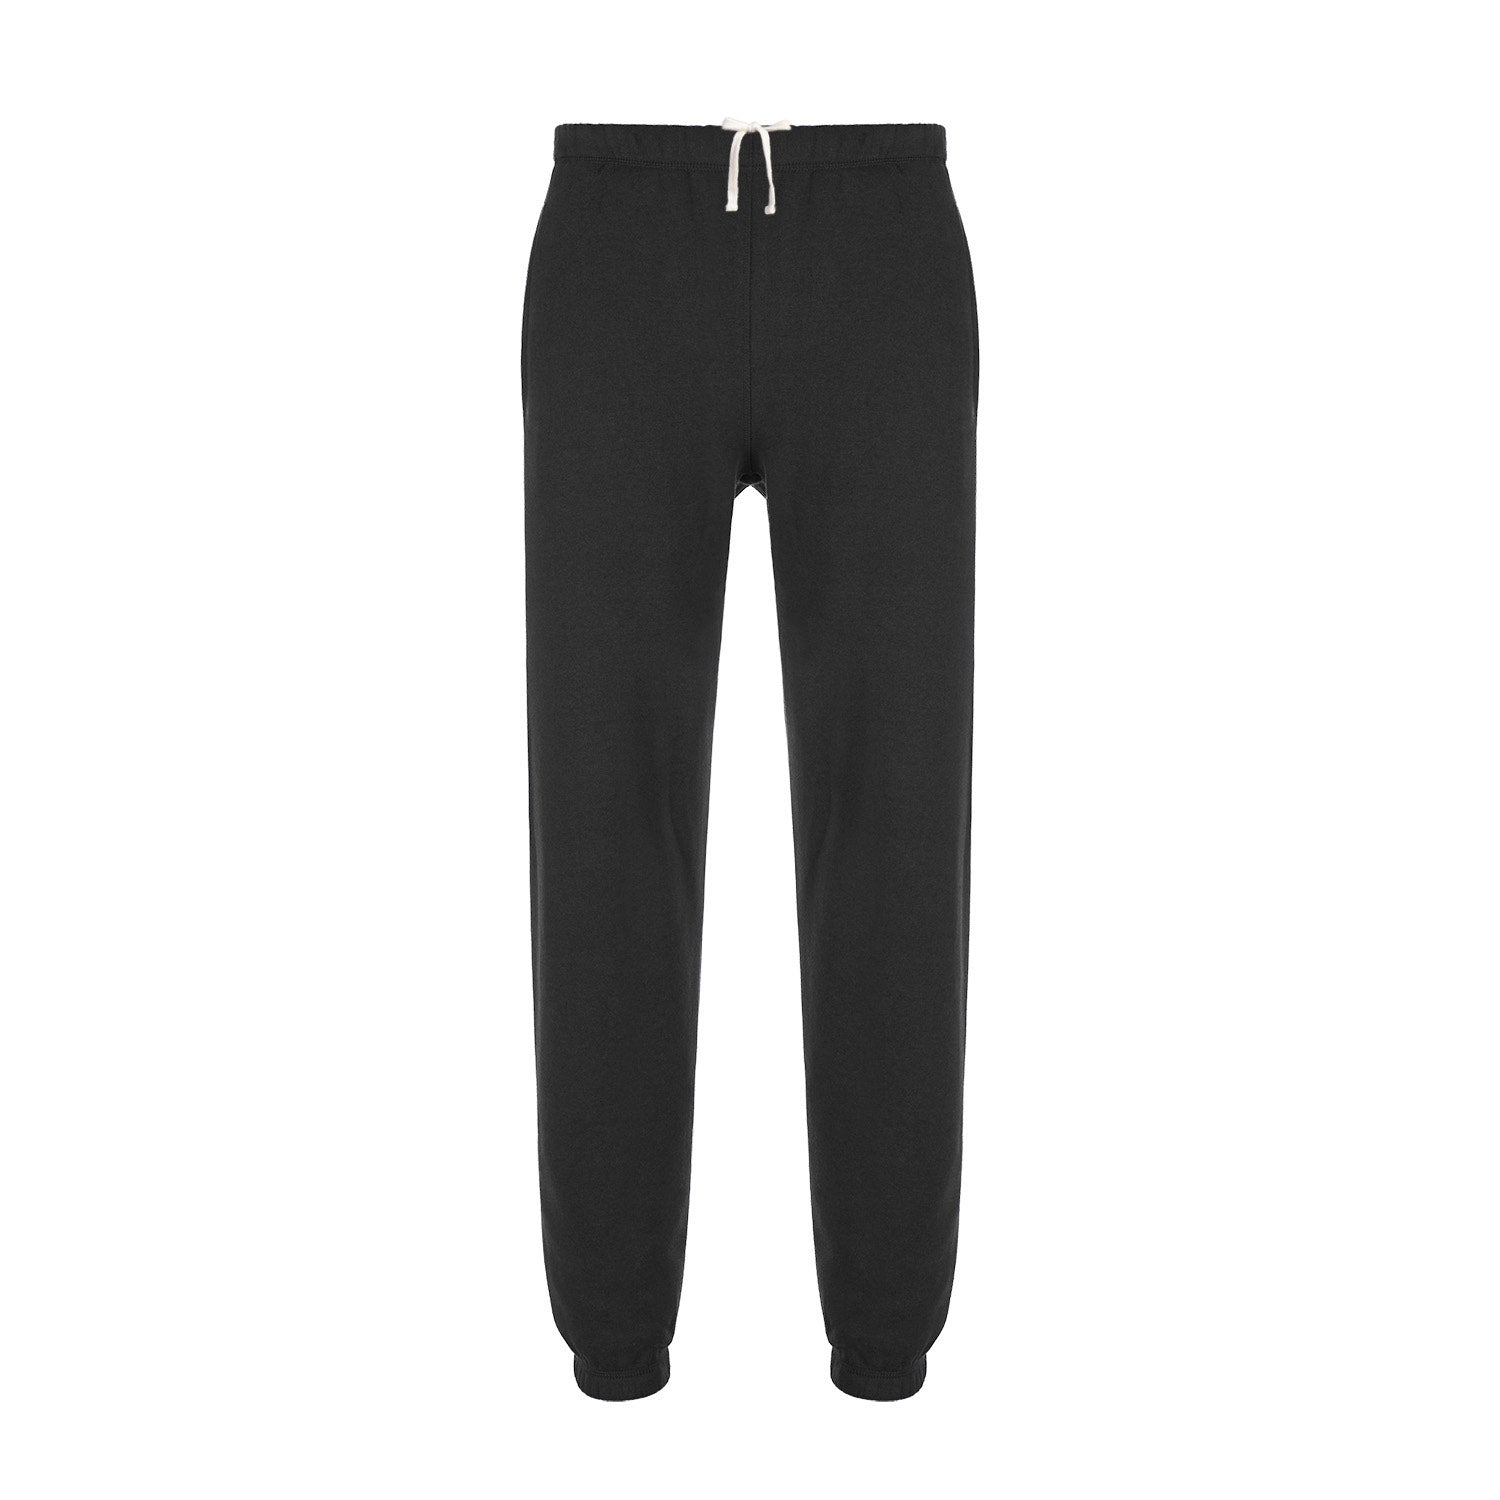 P00516 - Bay Hill Ladies Fleece Sweat Pant Black / XS